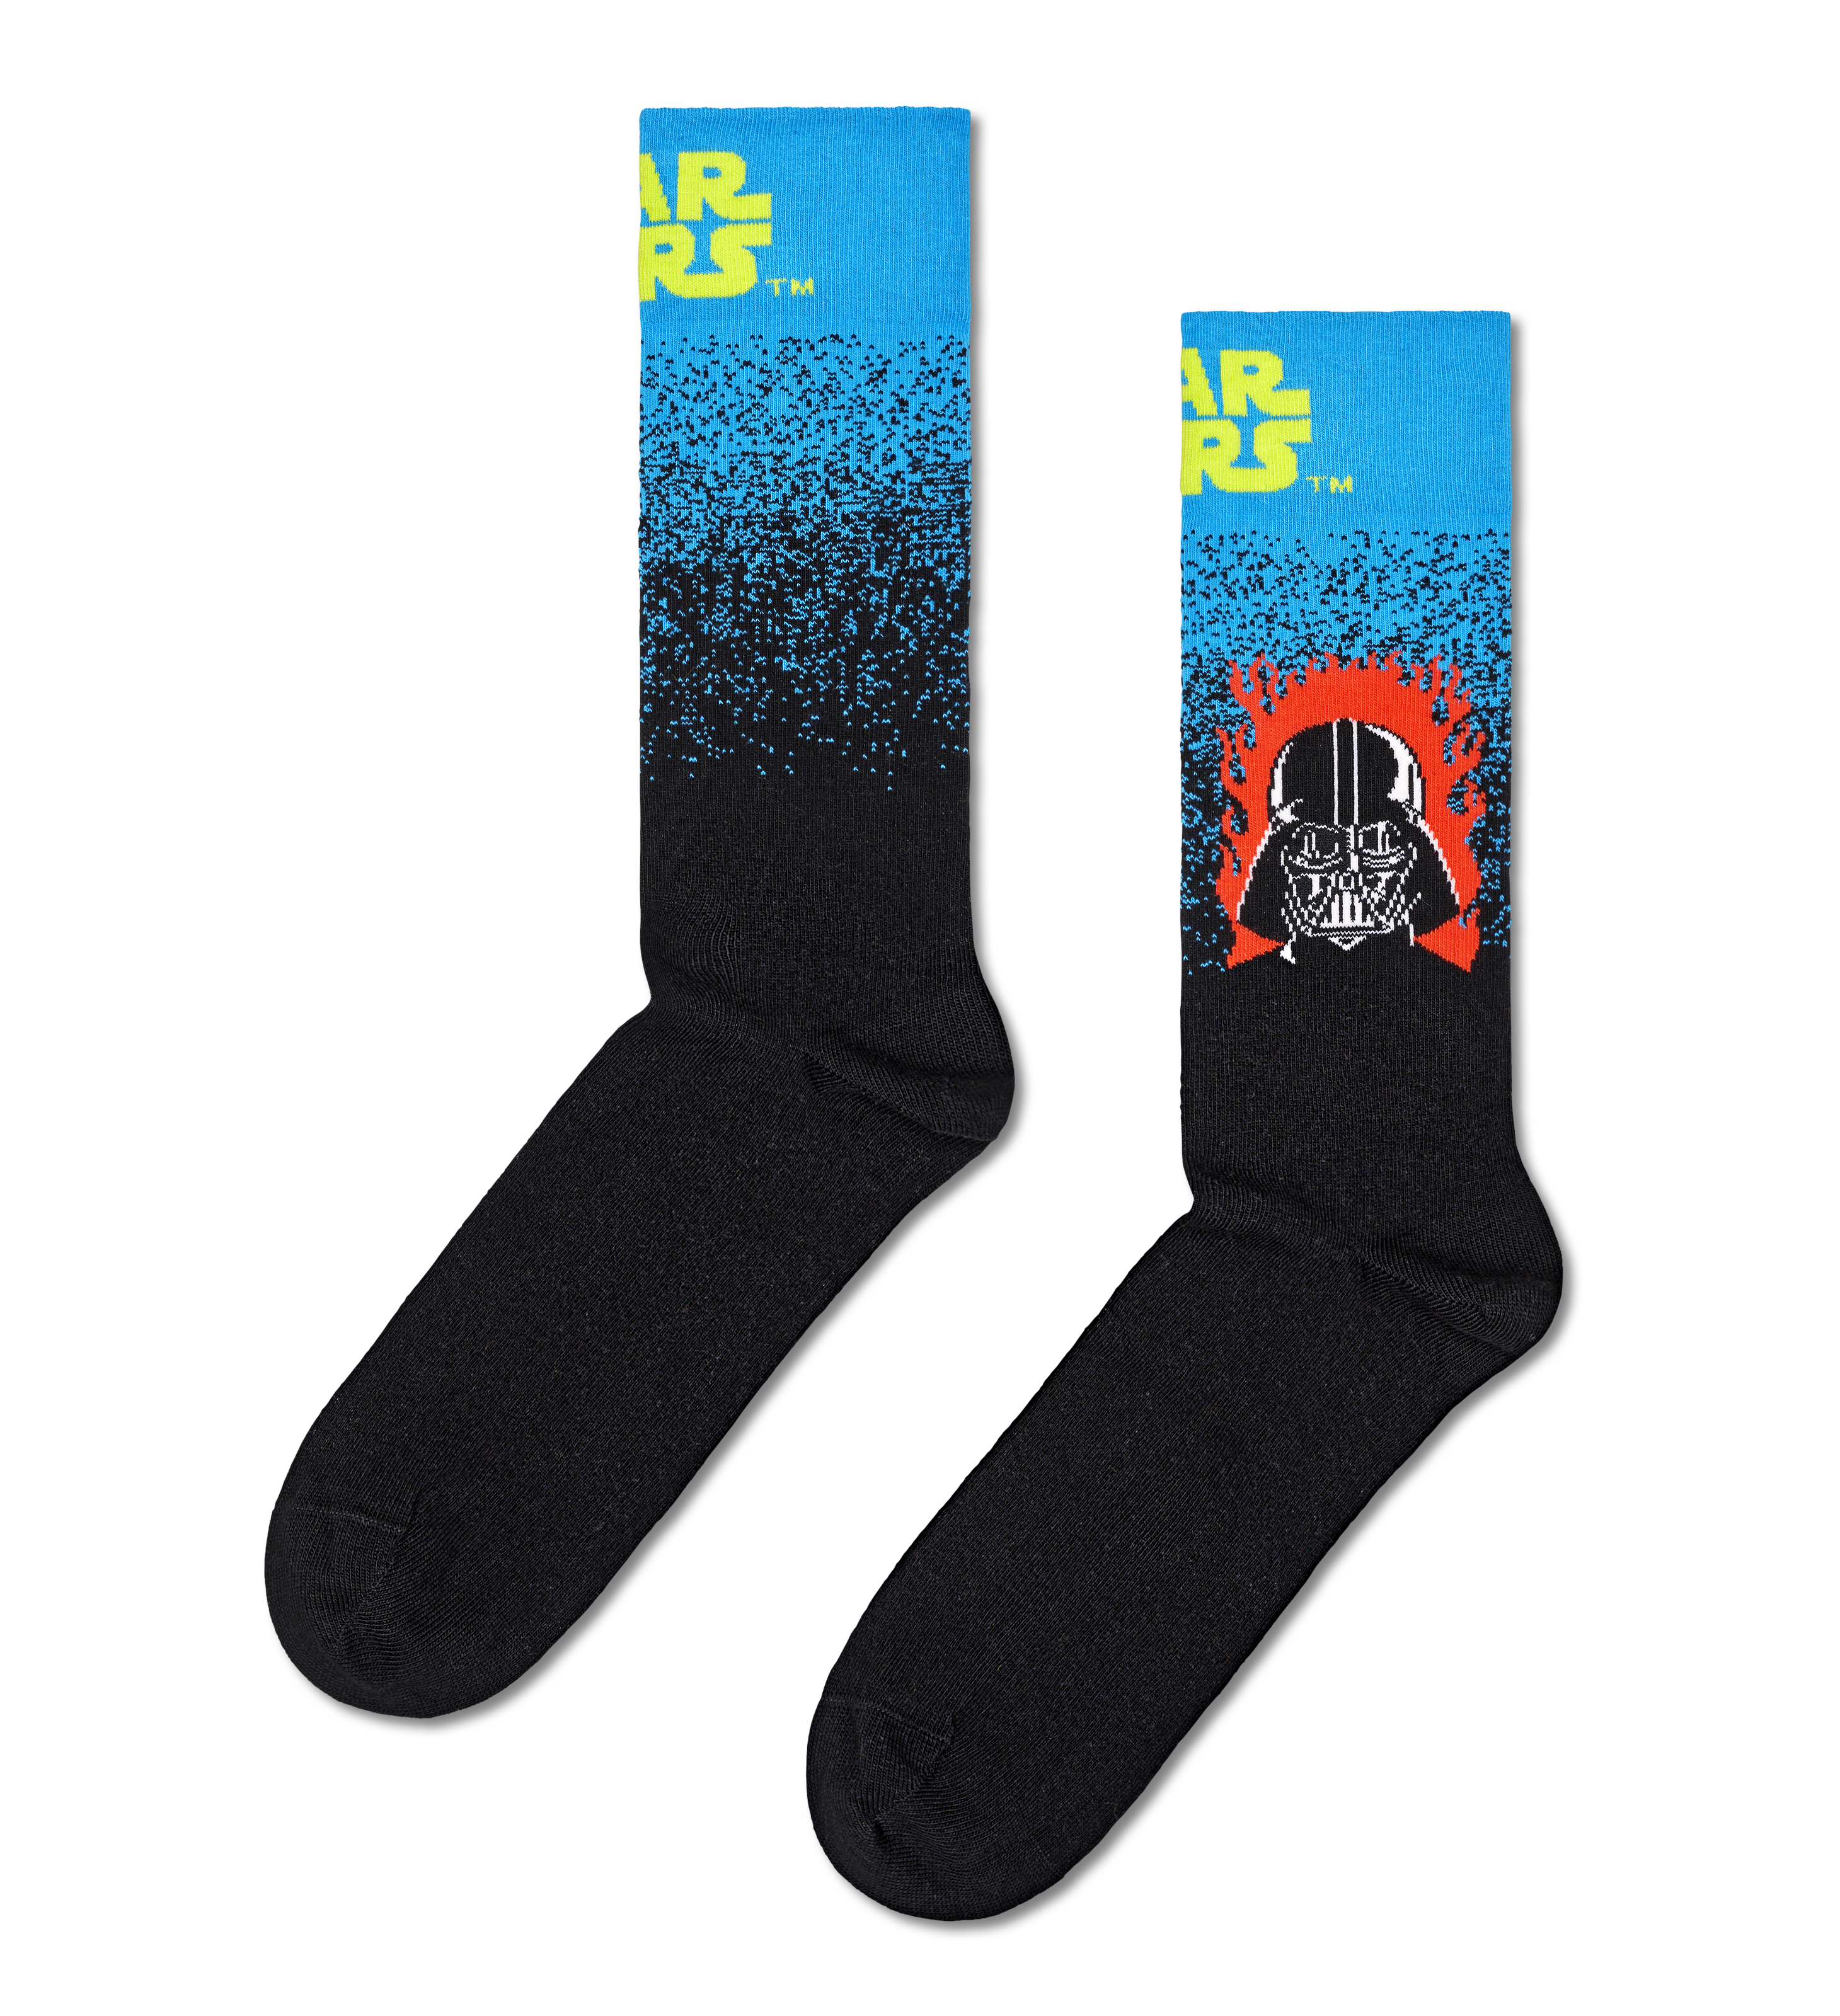 Star Wars™ Darth Vader Crew Sock product